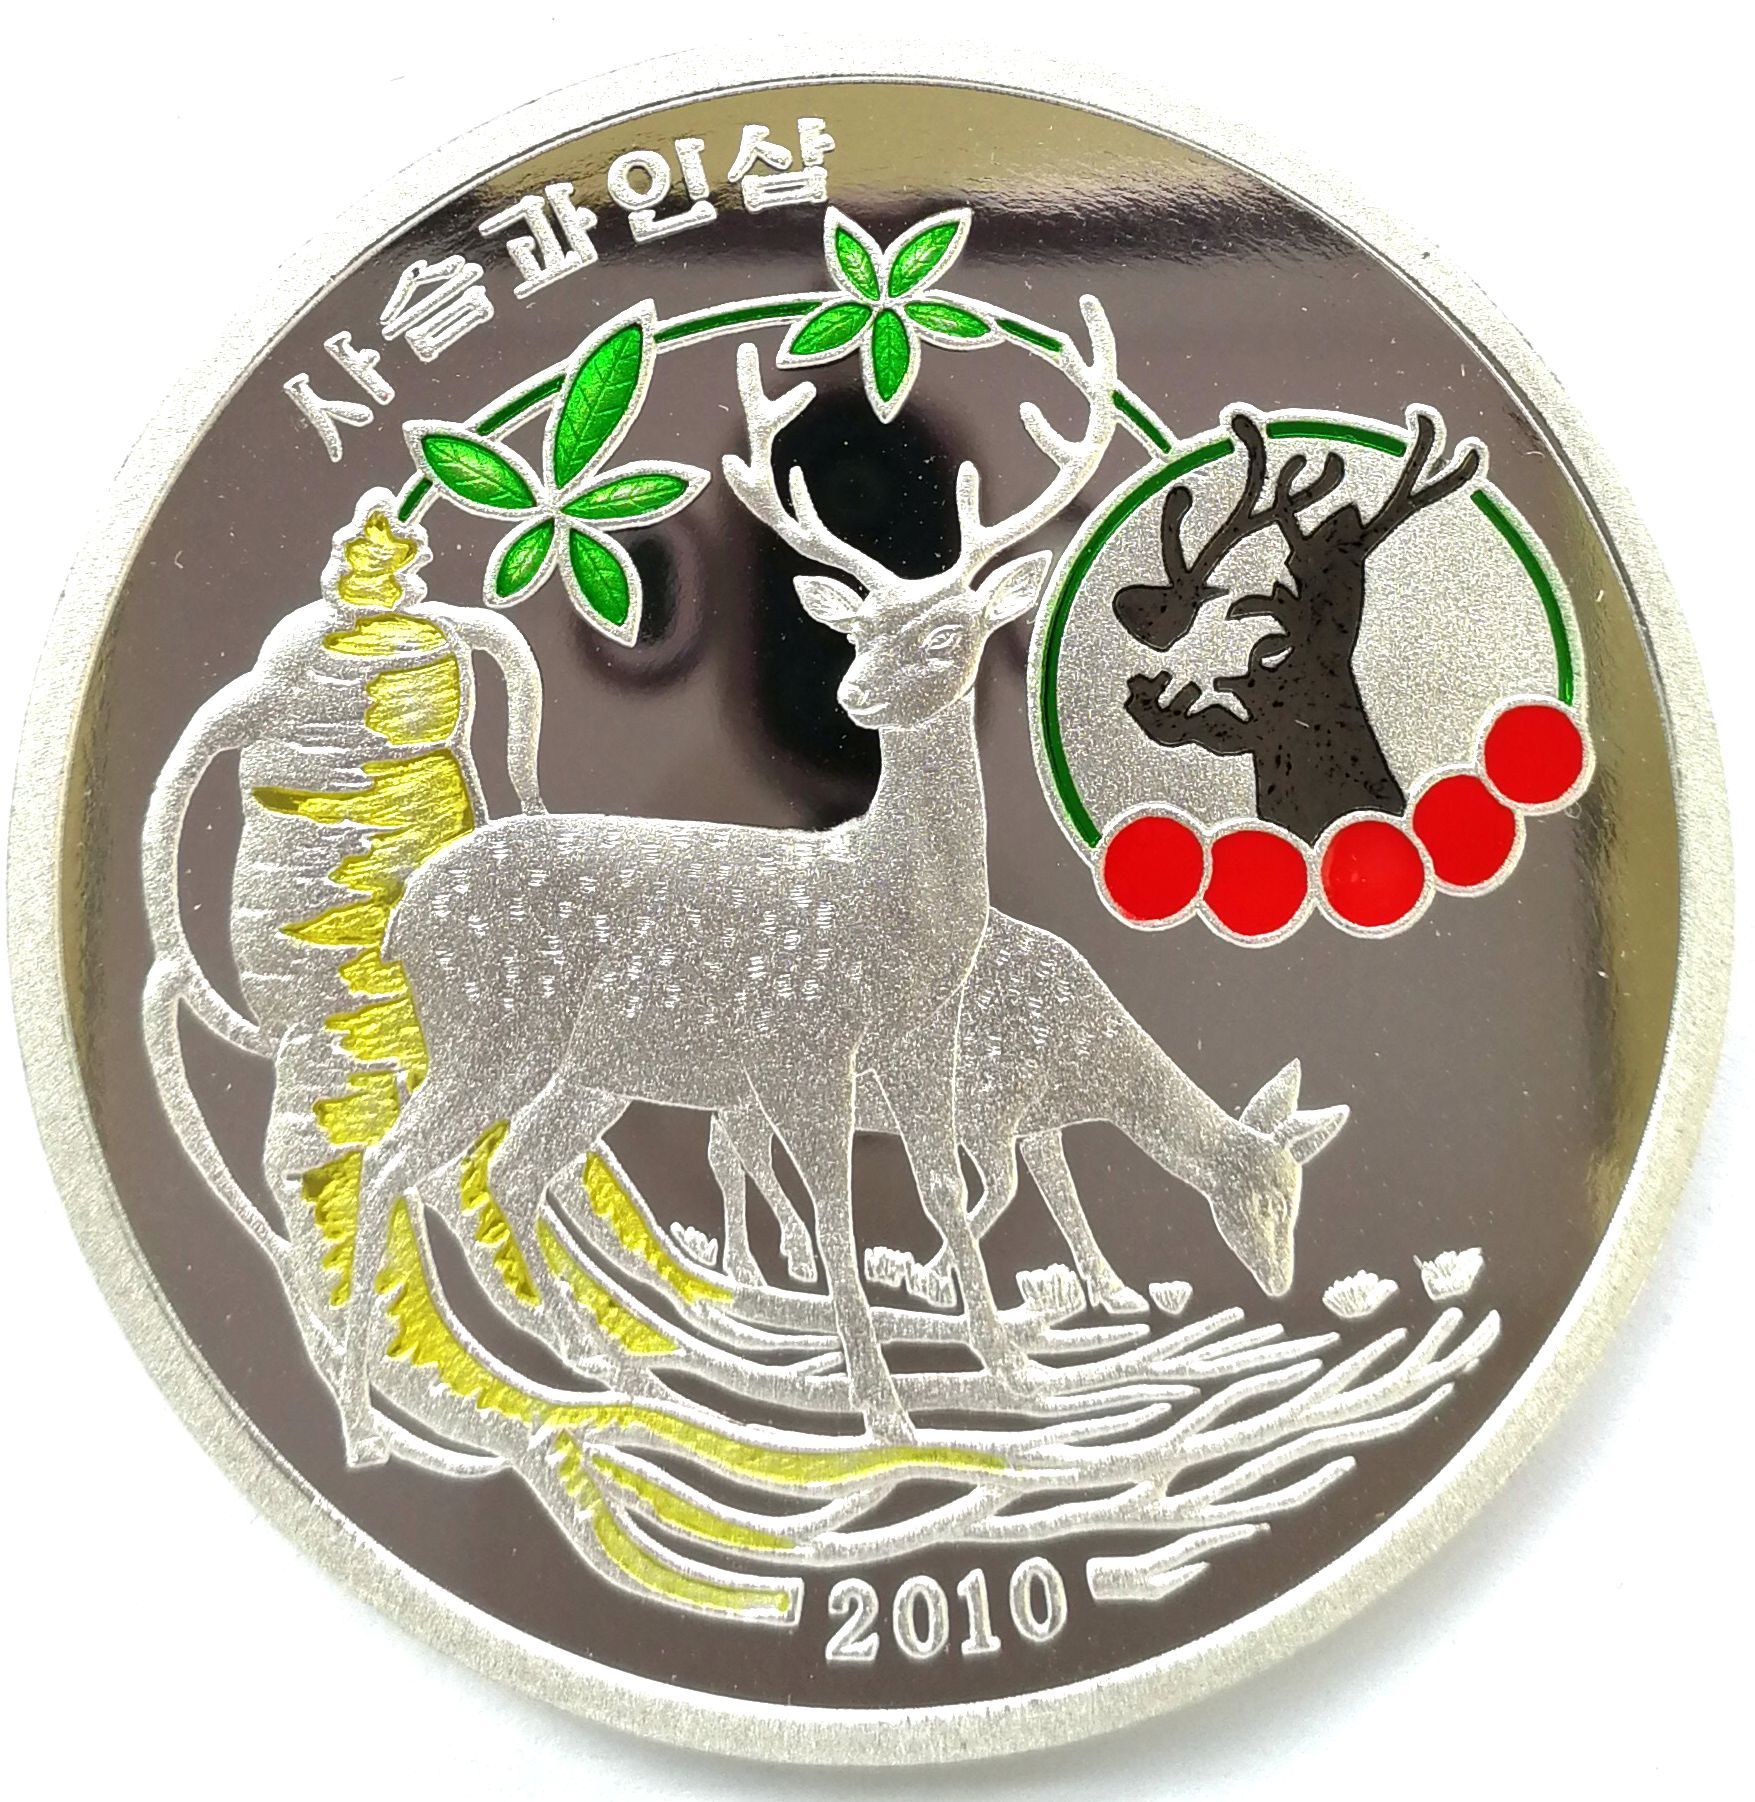 L3137, Korea "Deer" Commemorative Coin 20 Won, 2010